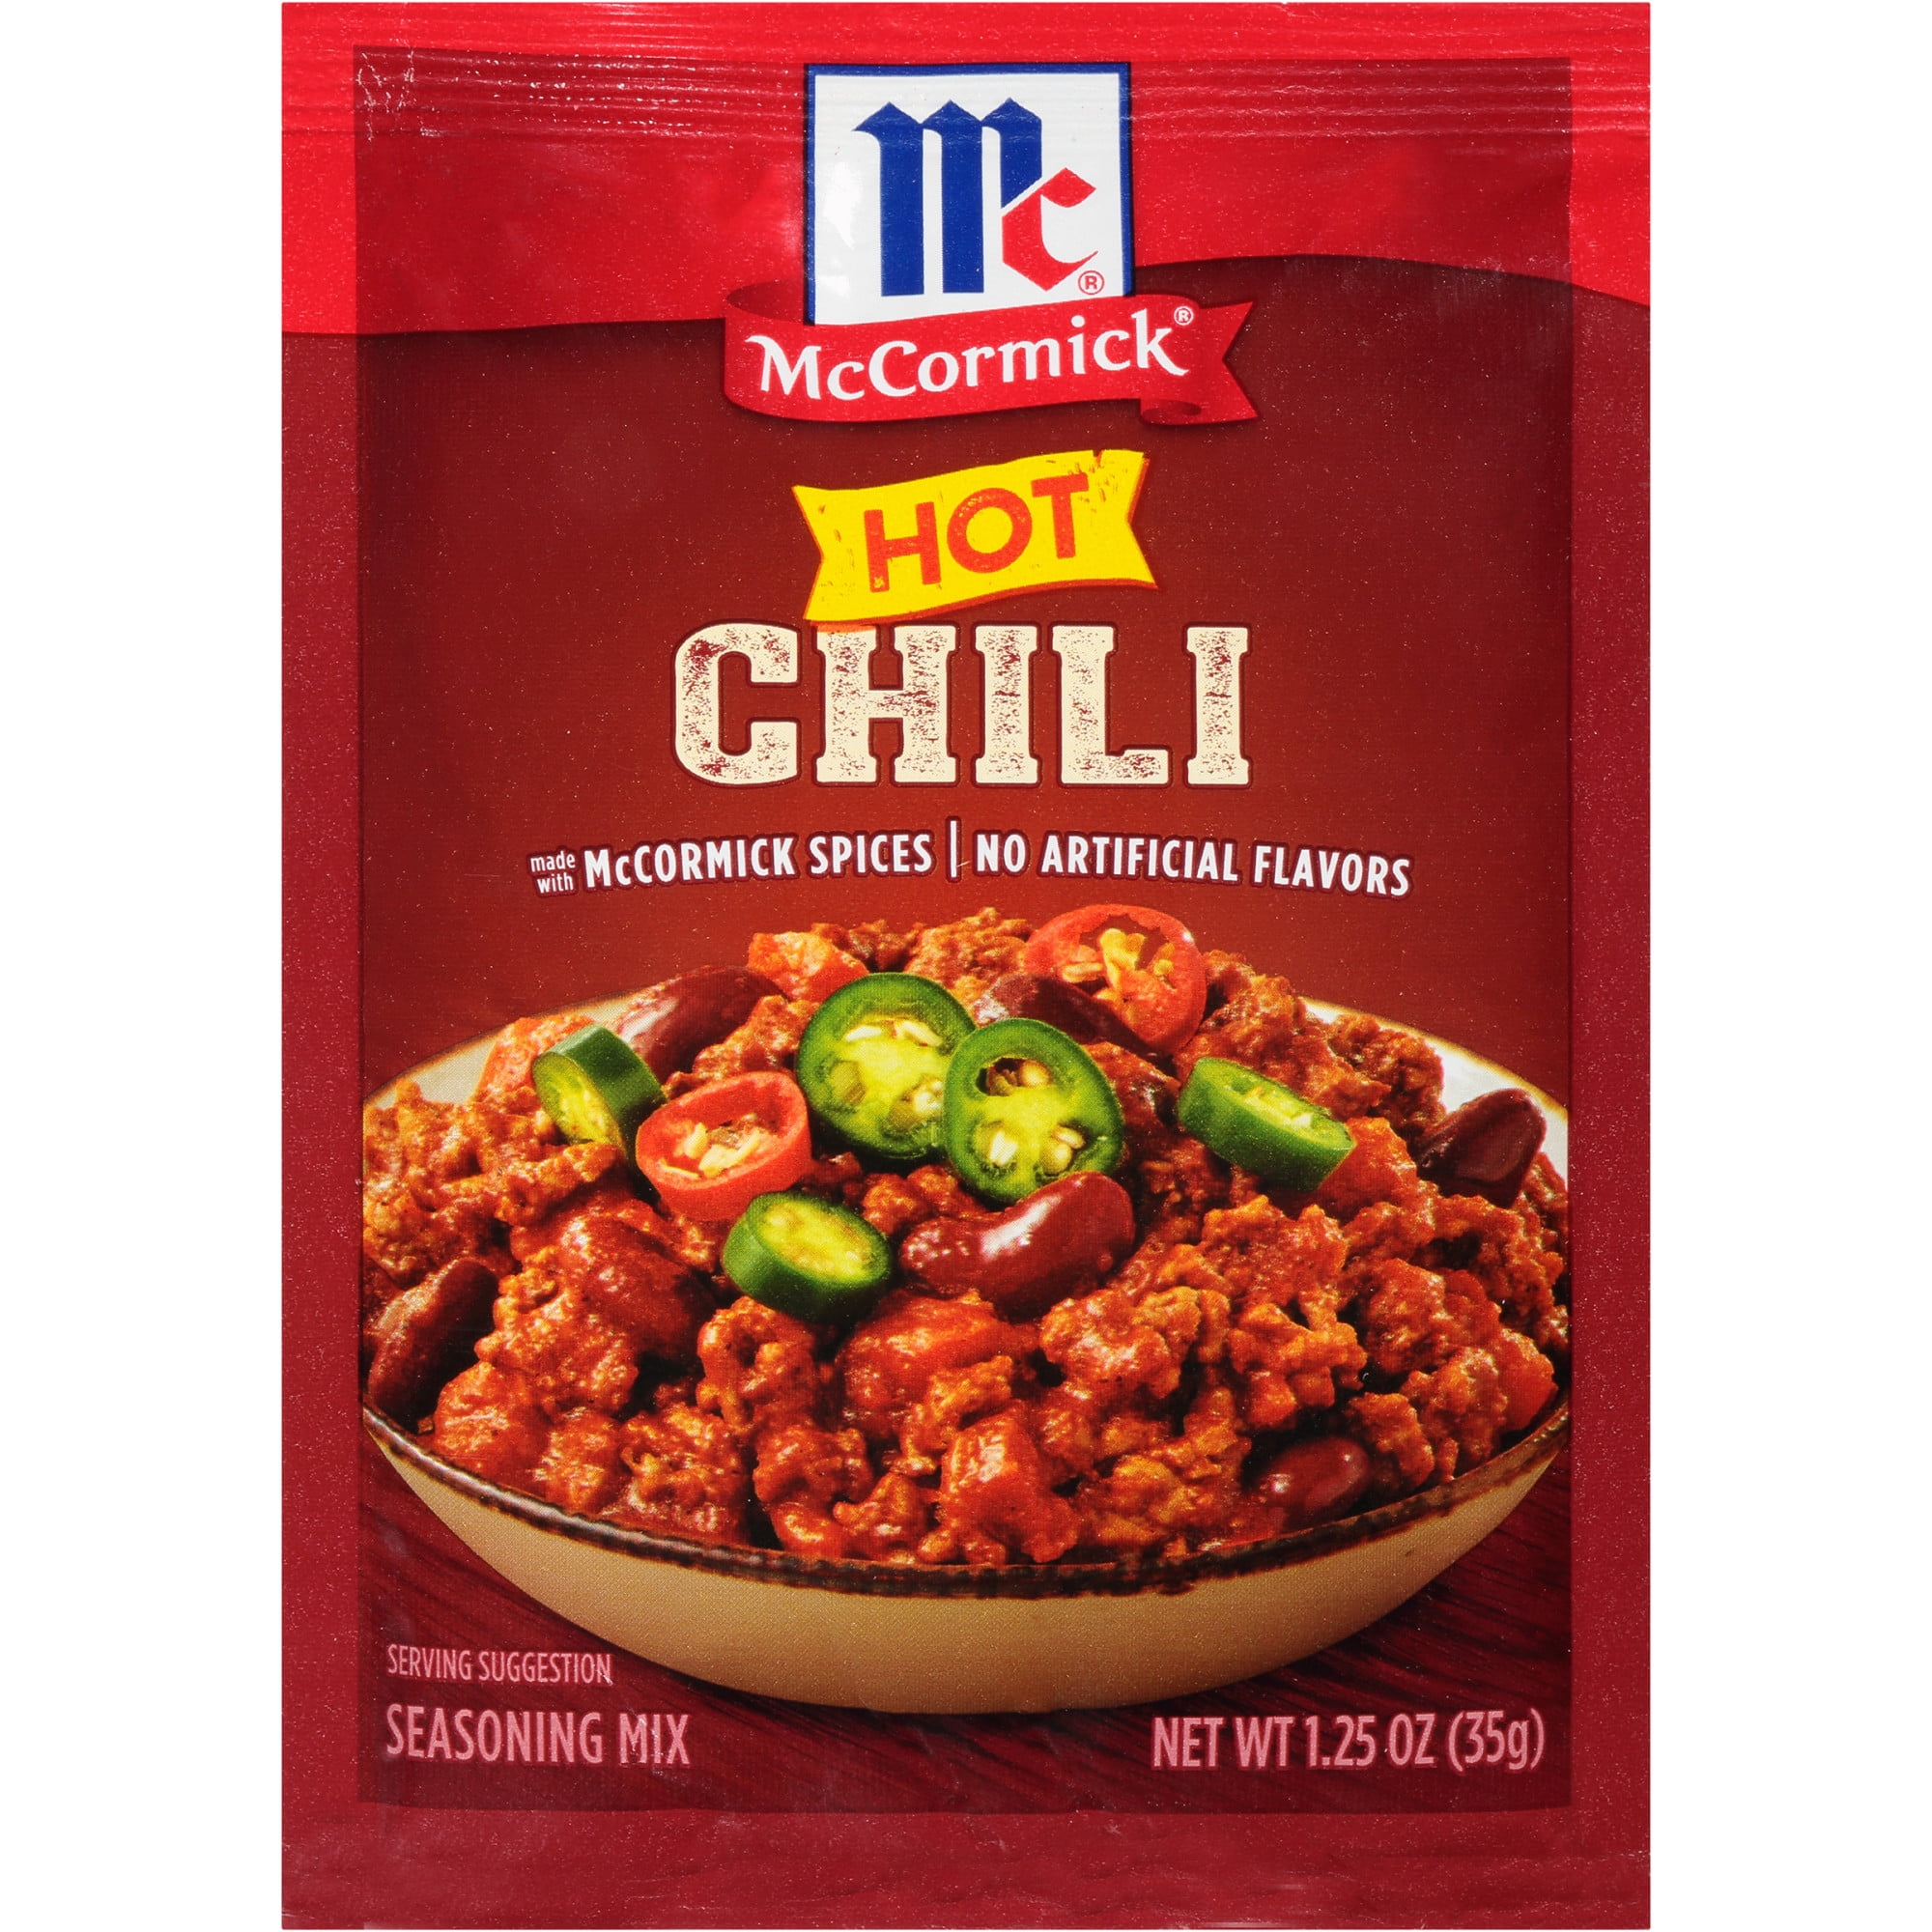 McCormick Chili Original Seasoning Mix, 14 oz. 